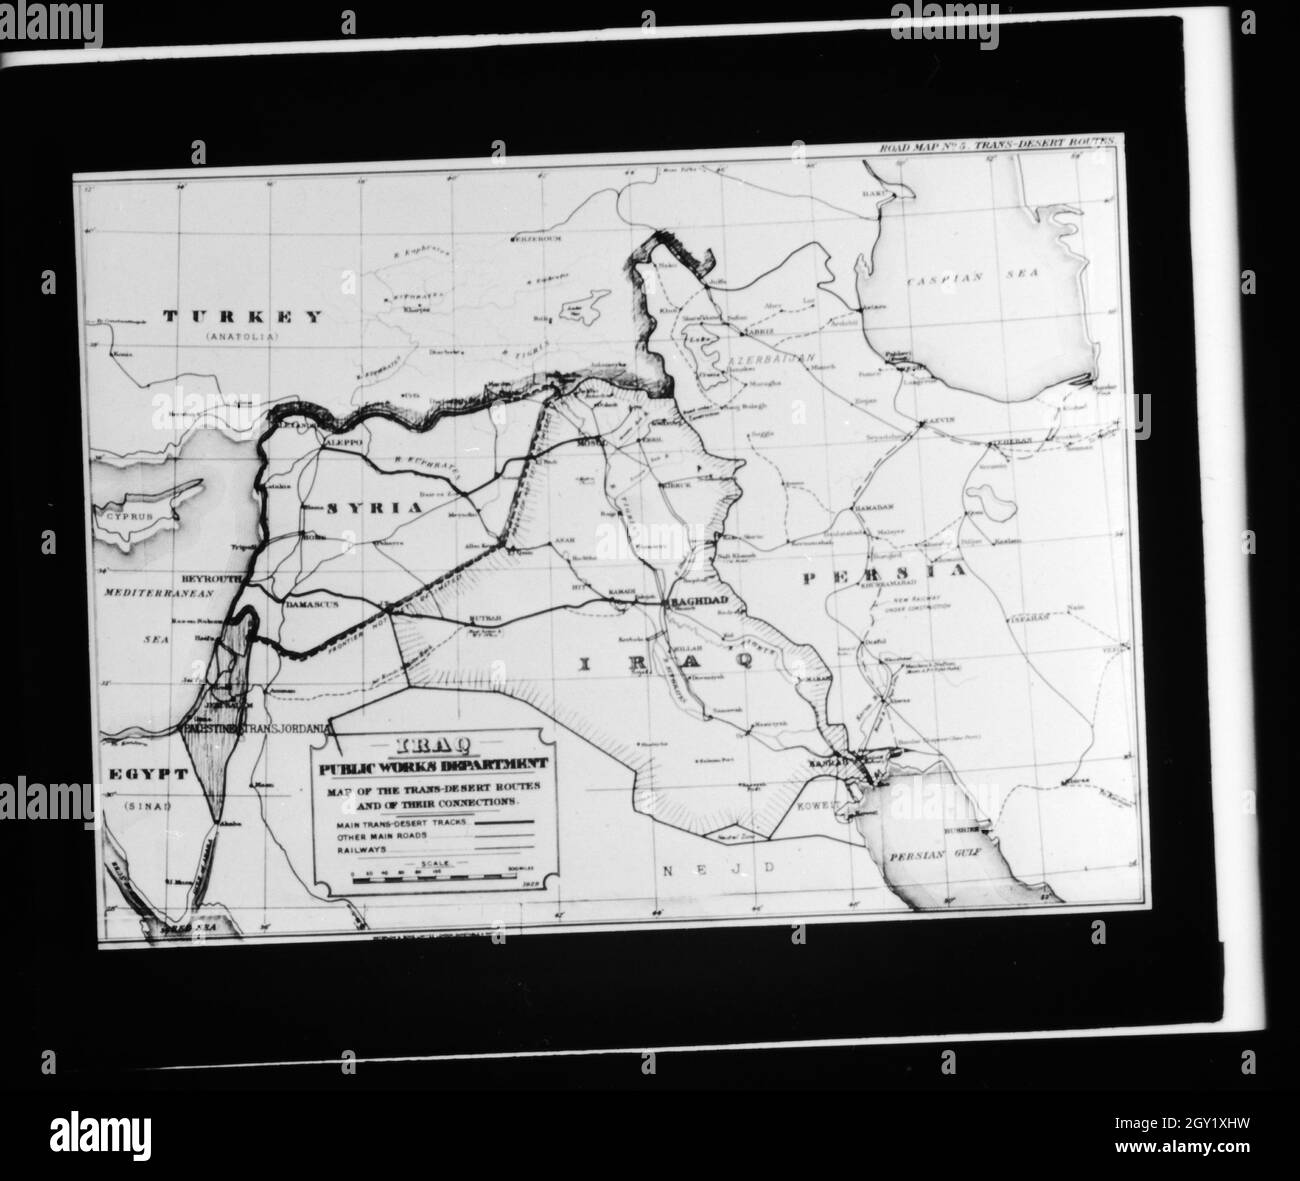 Reproduktion der Karte des Nahen Ostens, Deutschland 1930er Jahre. Reproduktion von einer Karte des Nahen Ostens, Deutschland 1930. Stockfoto